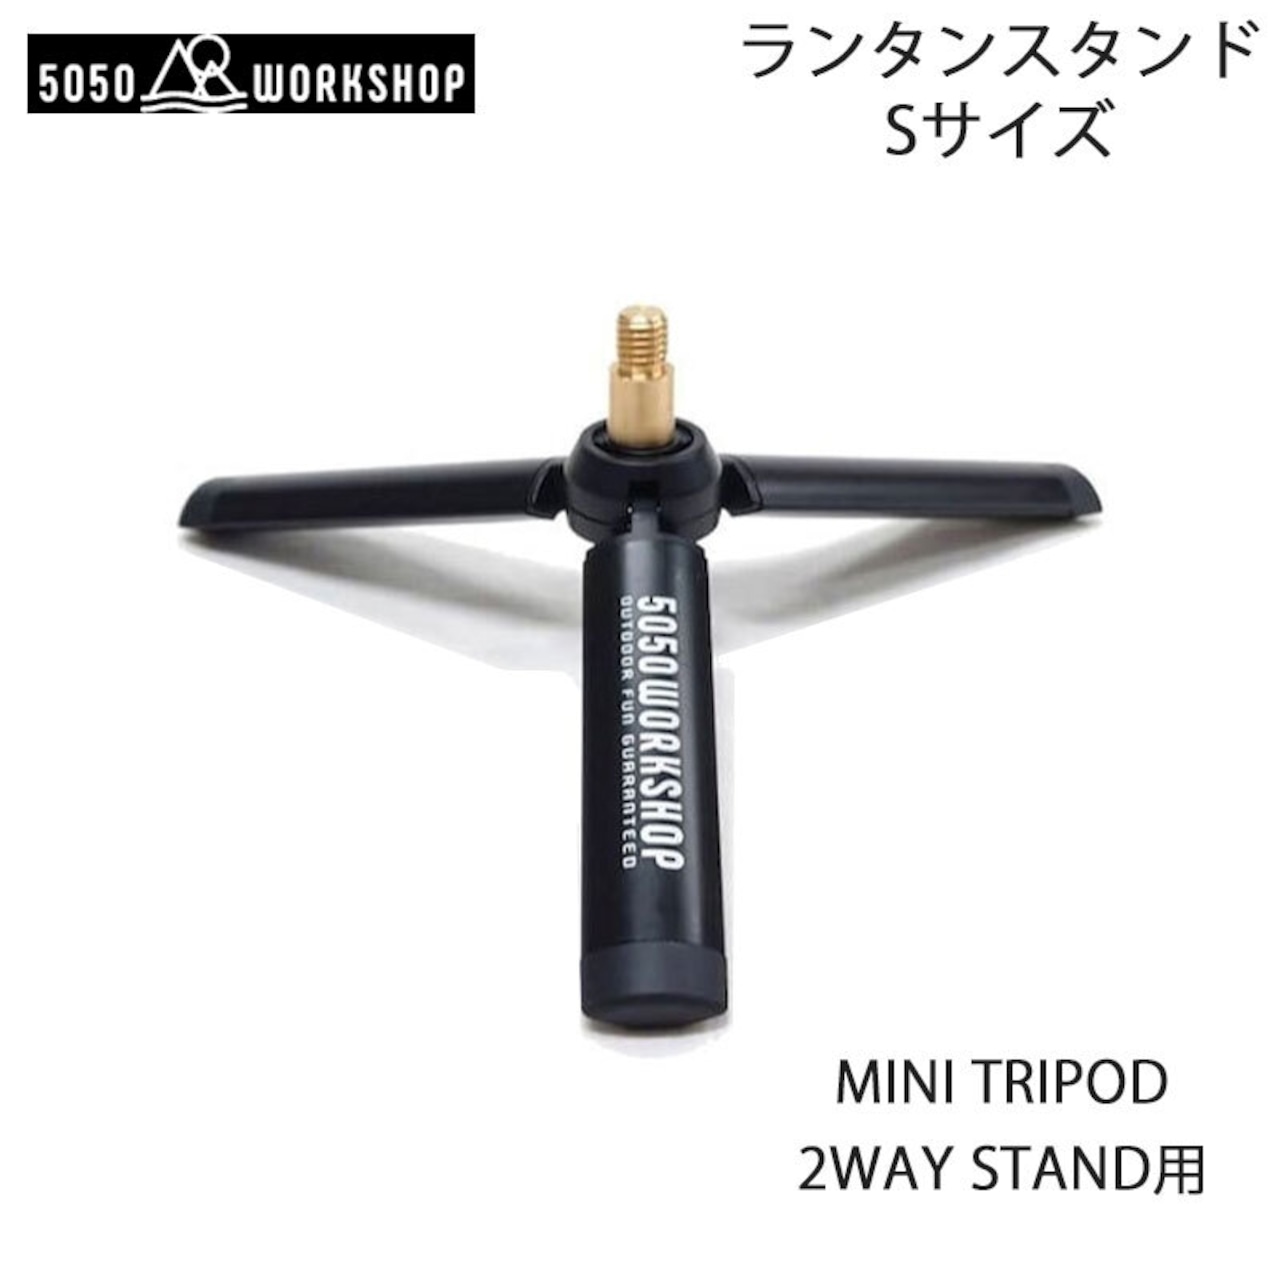 5050WORKSHOP (5050ワークショップ) MINI TRIPOD 2WAY STAND用 拡張 トリポッド